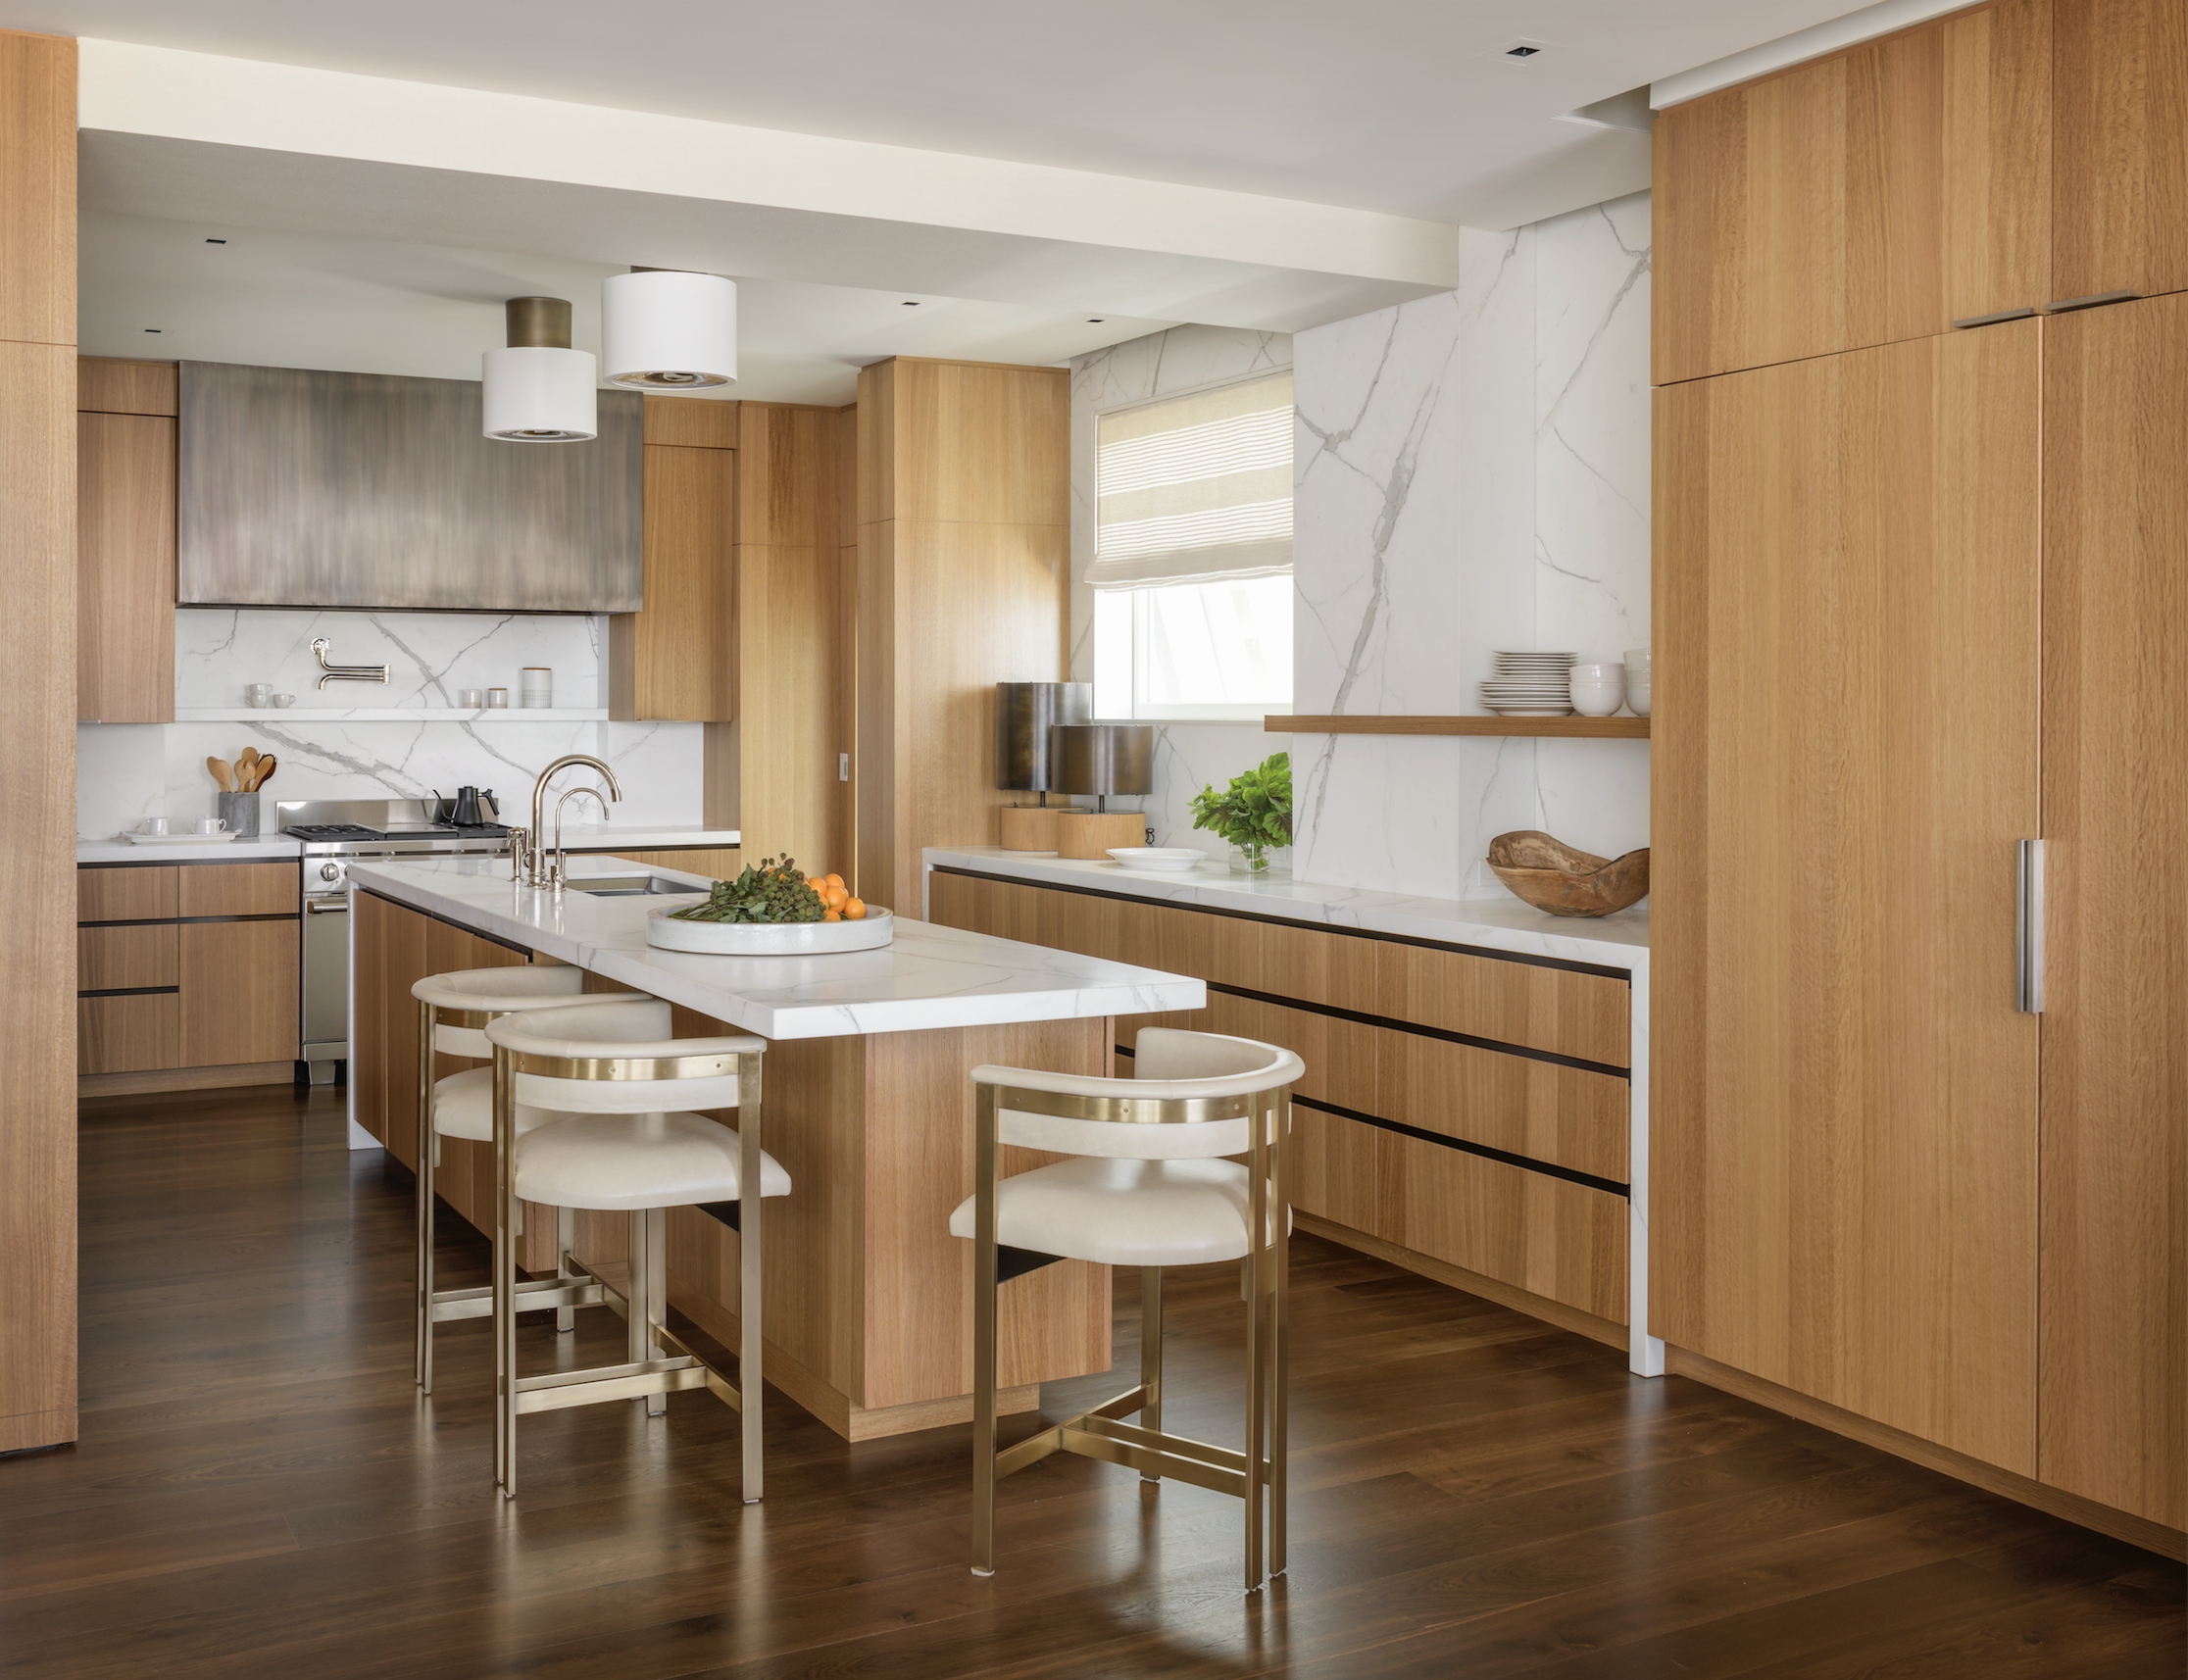 kitchen design trends for 2020 ...